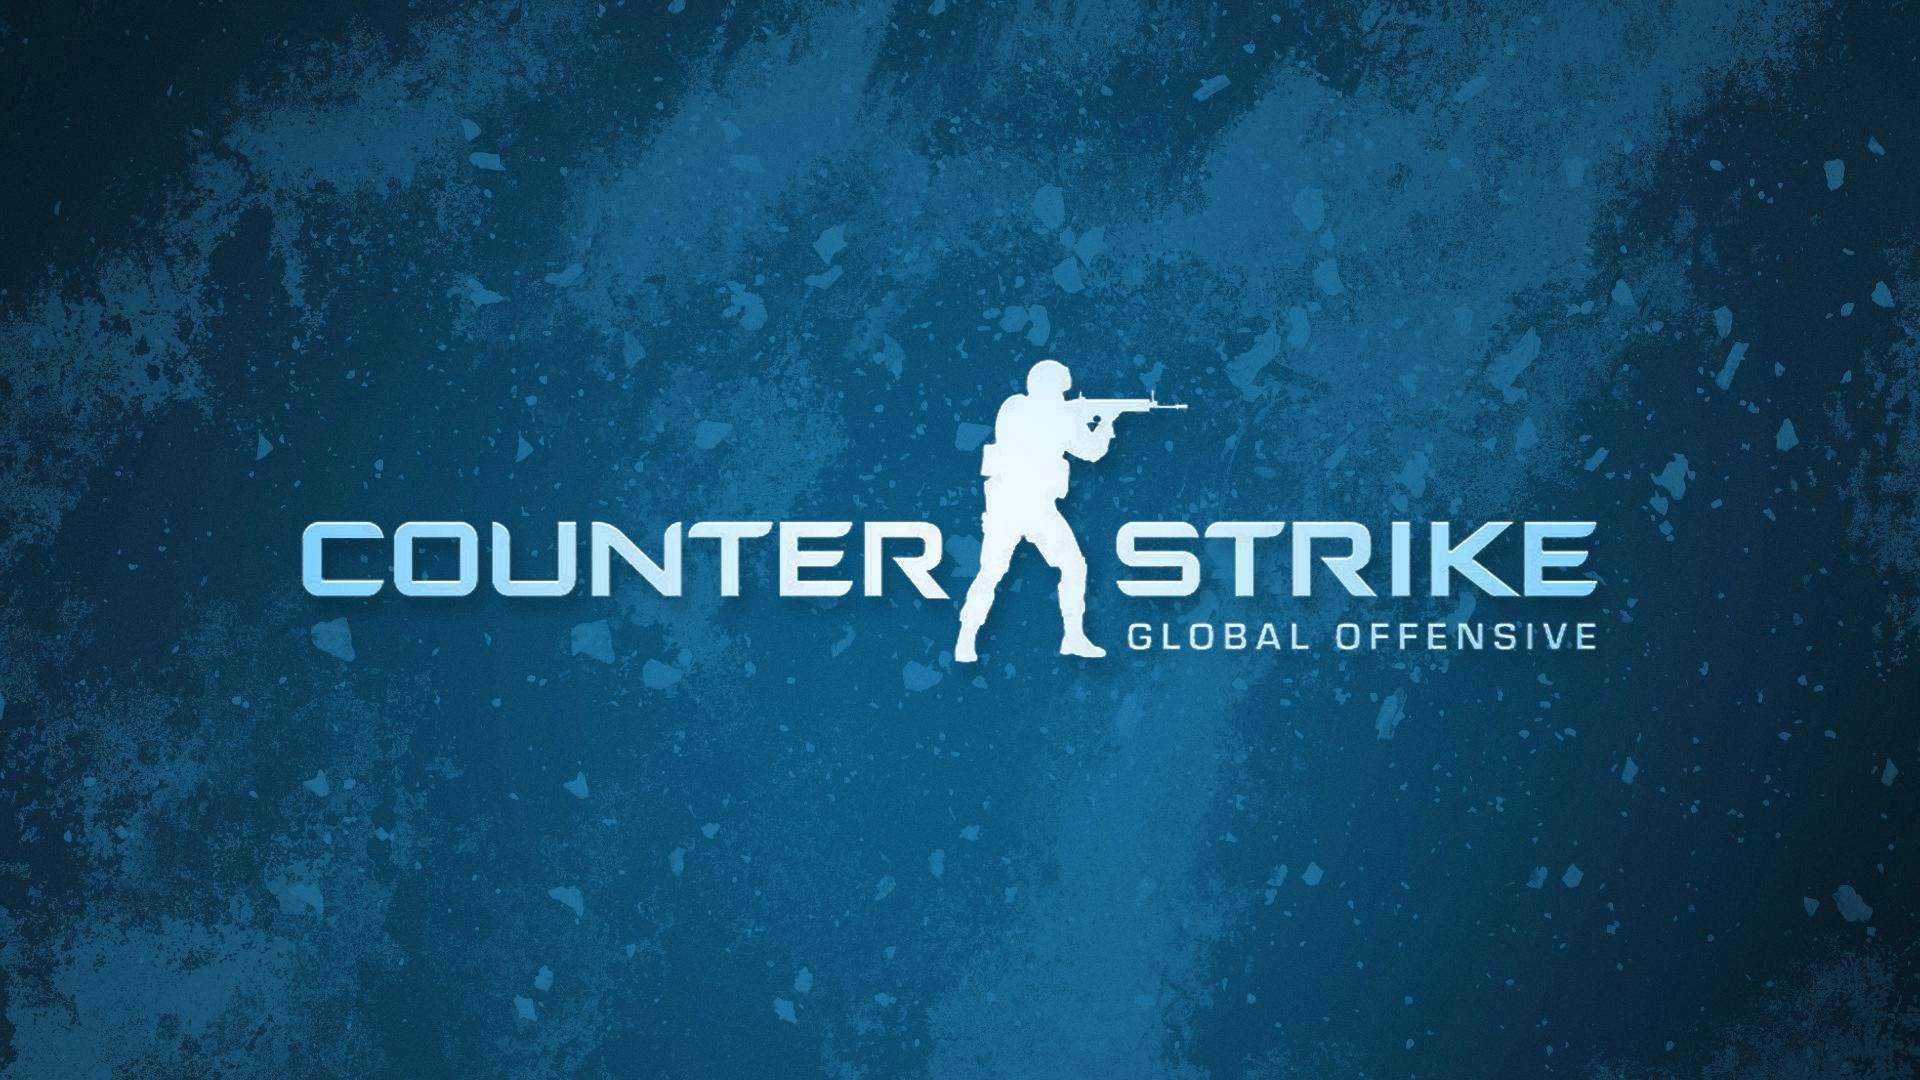 Обложка игры Counter-Strike: Global Offensive